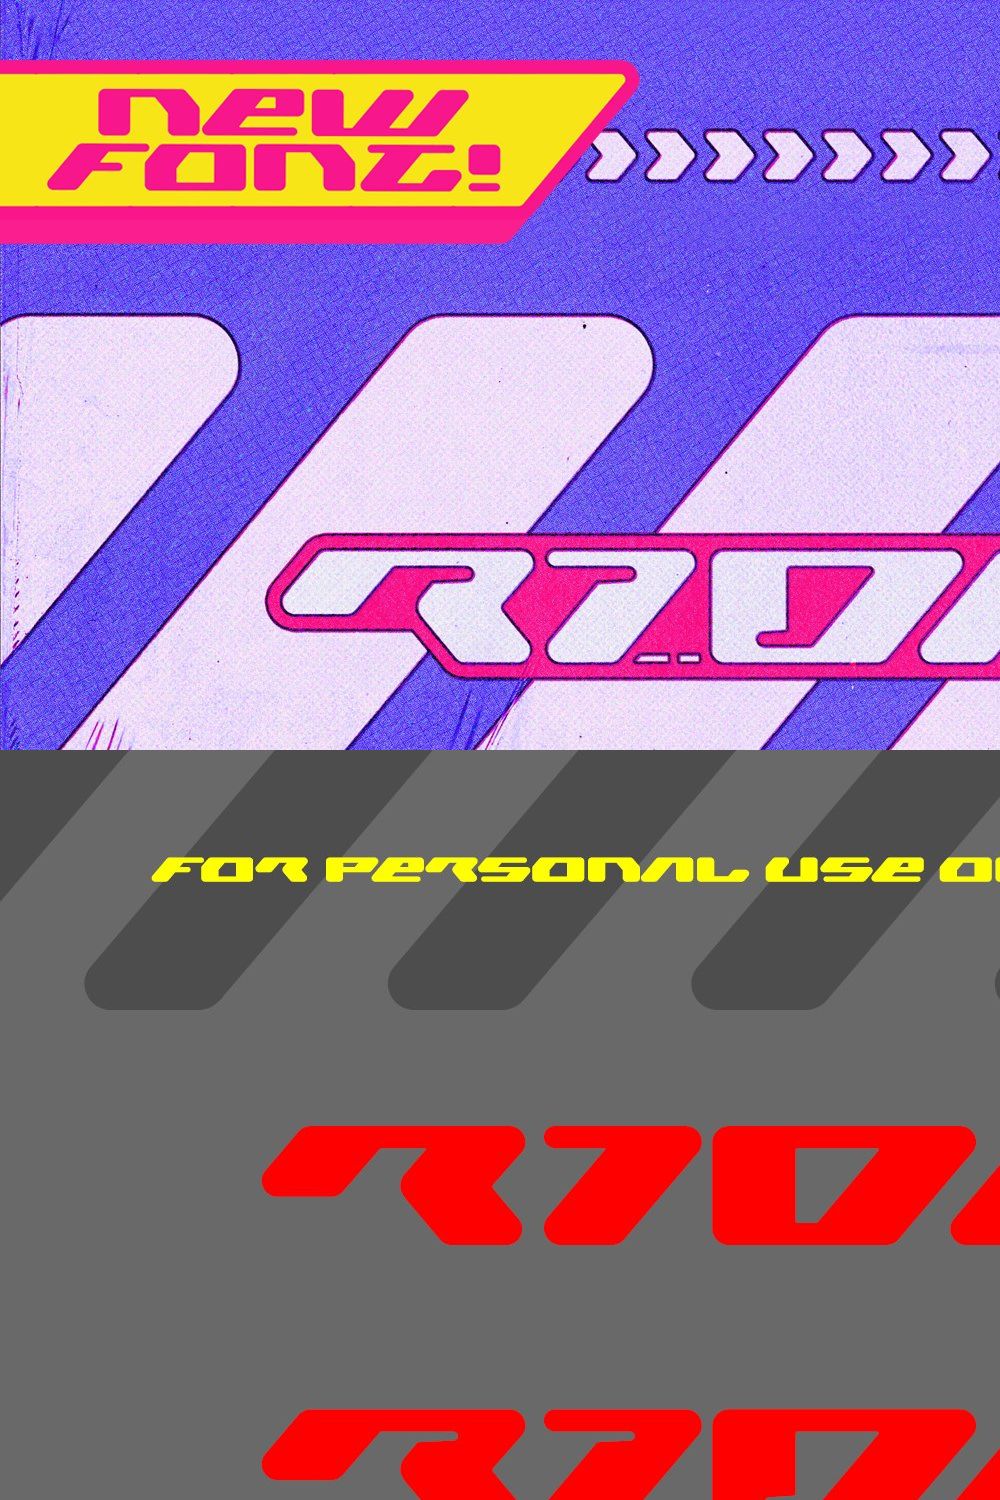 Ridari - Futuristic Sci-Fi Typeface pinterest preview image.